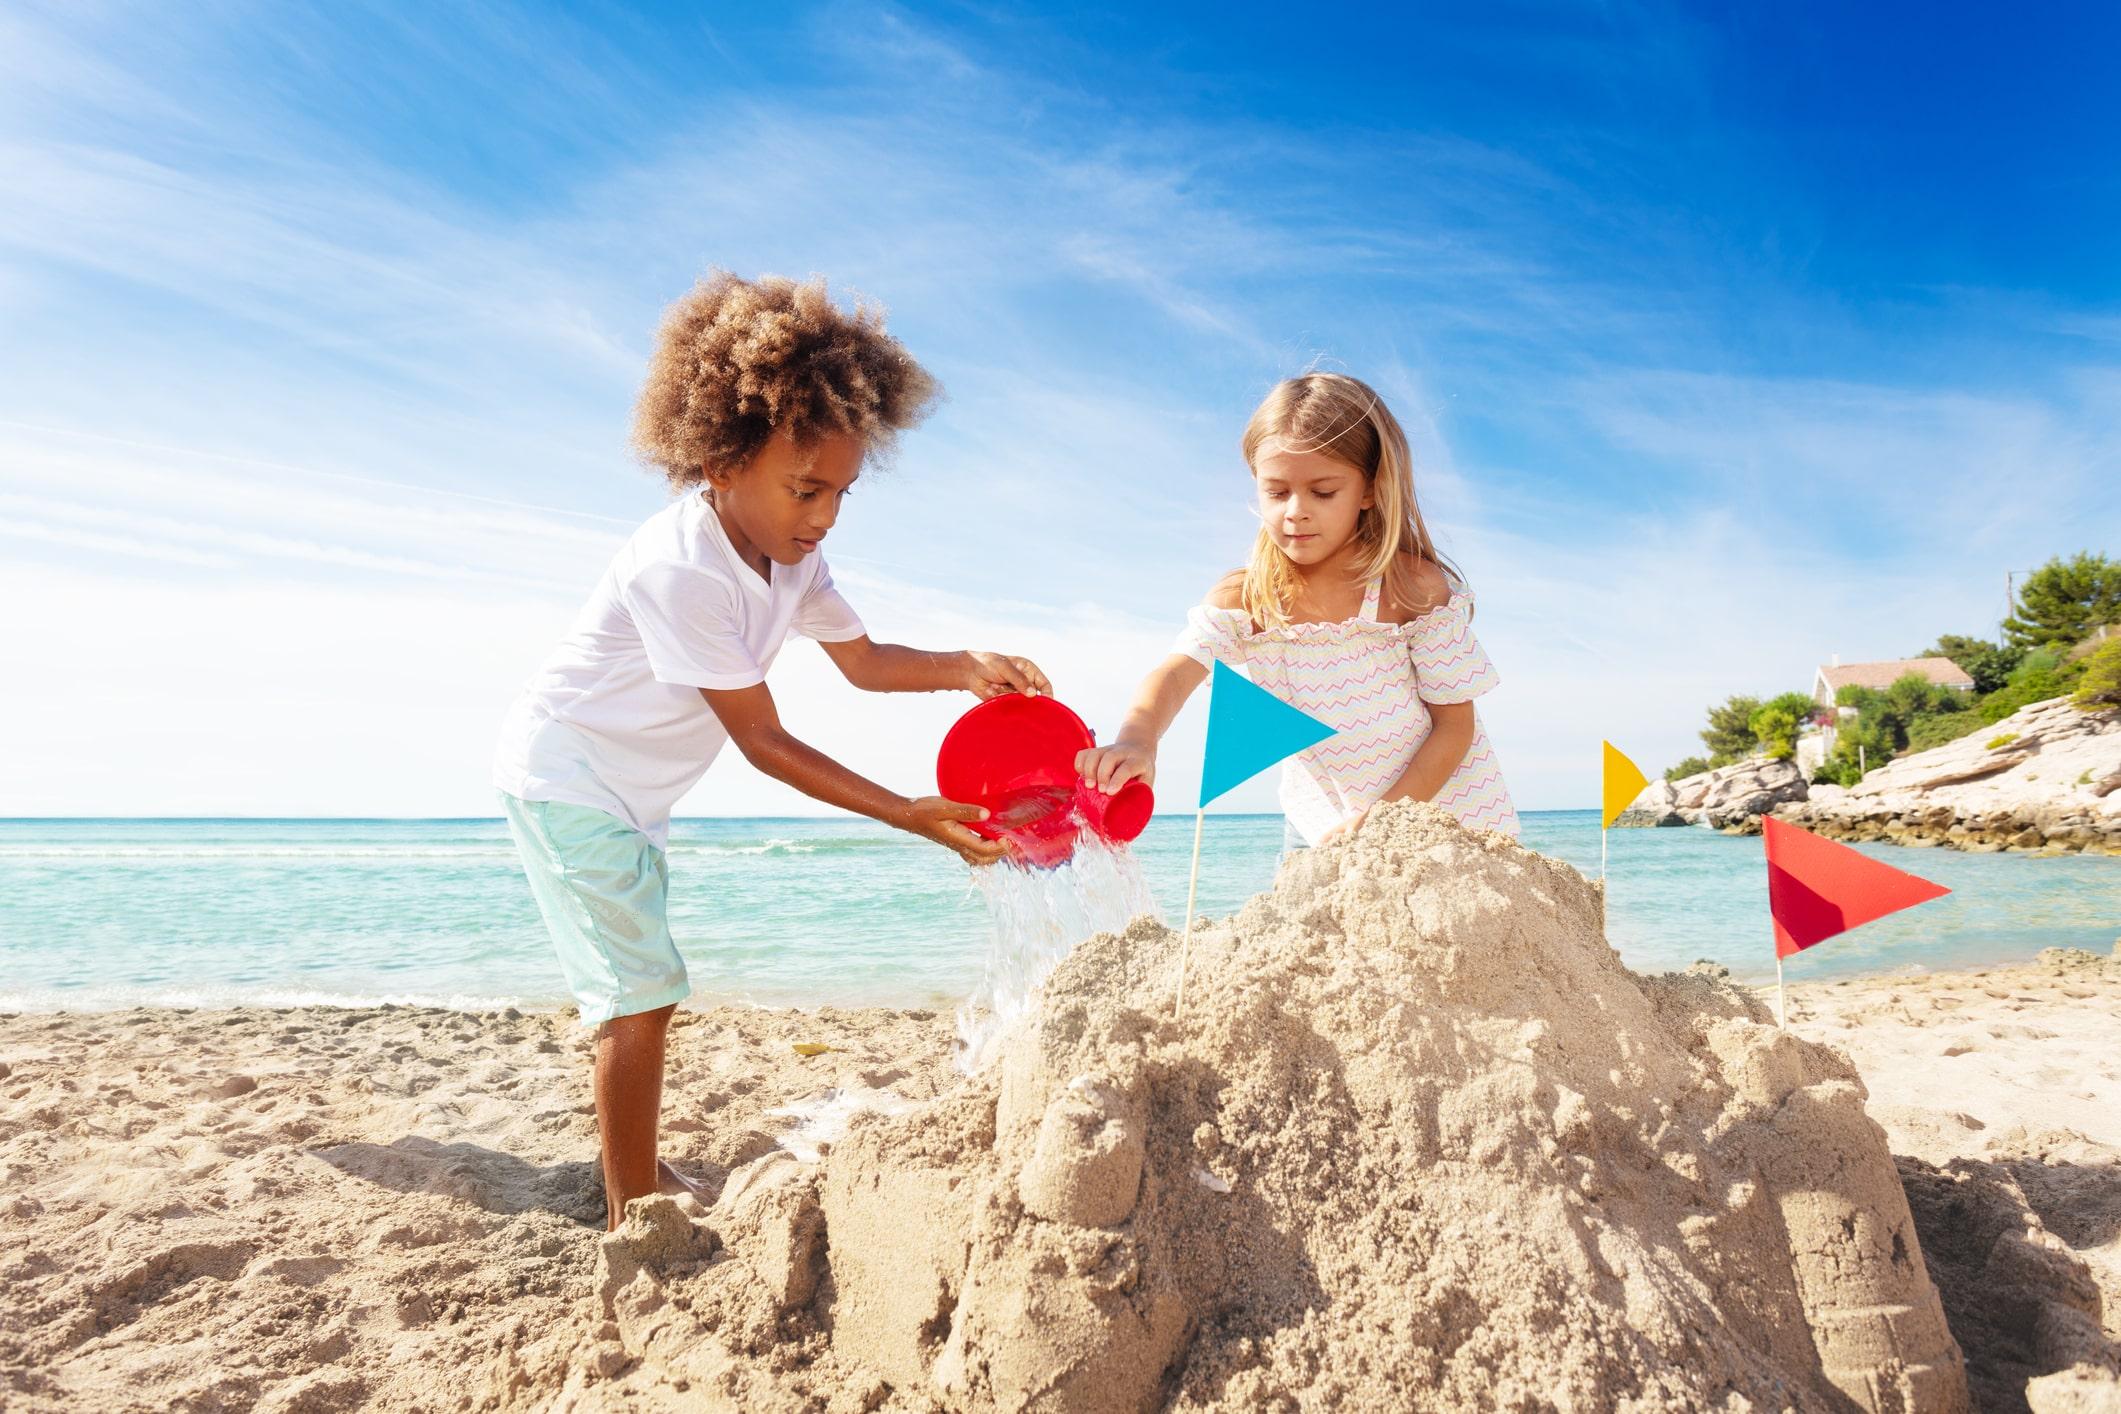 Children making sand castles on the beach